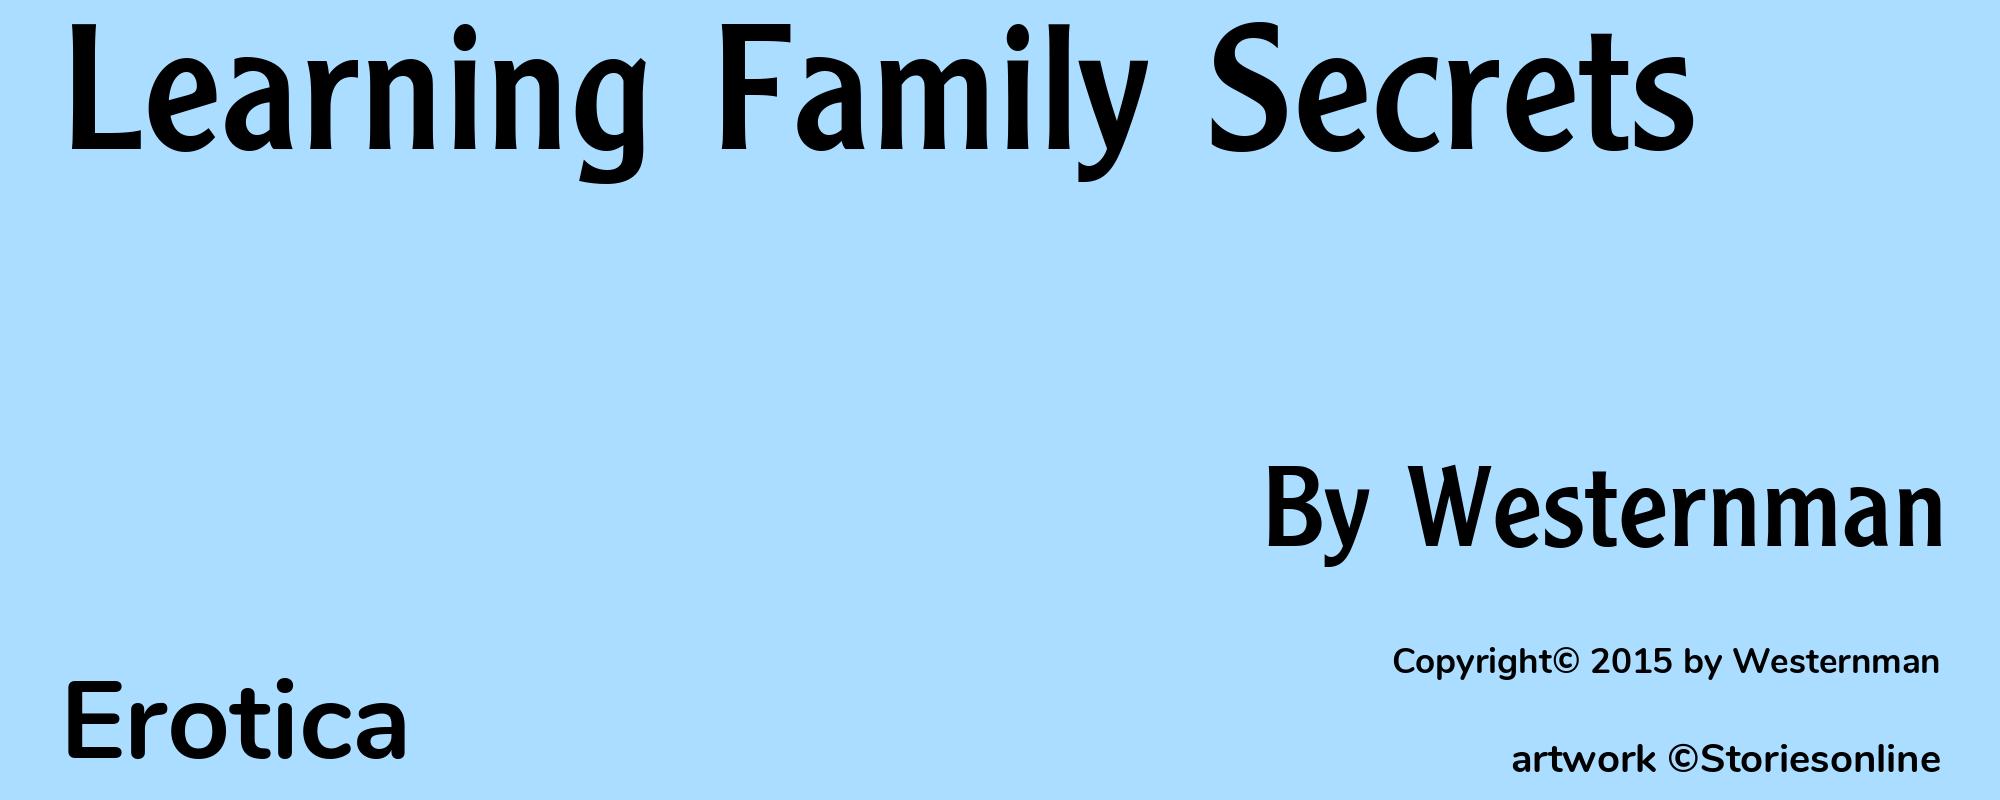 Learning Family Secrets - Cover